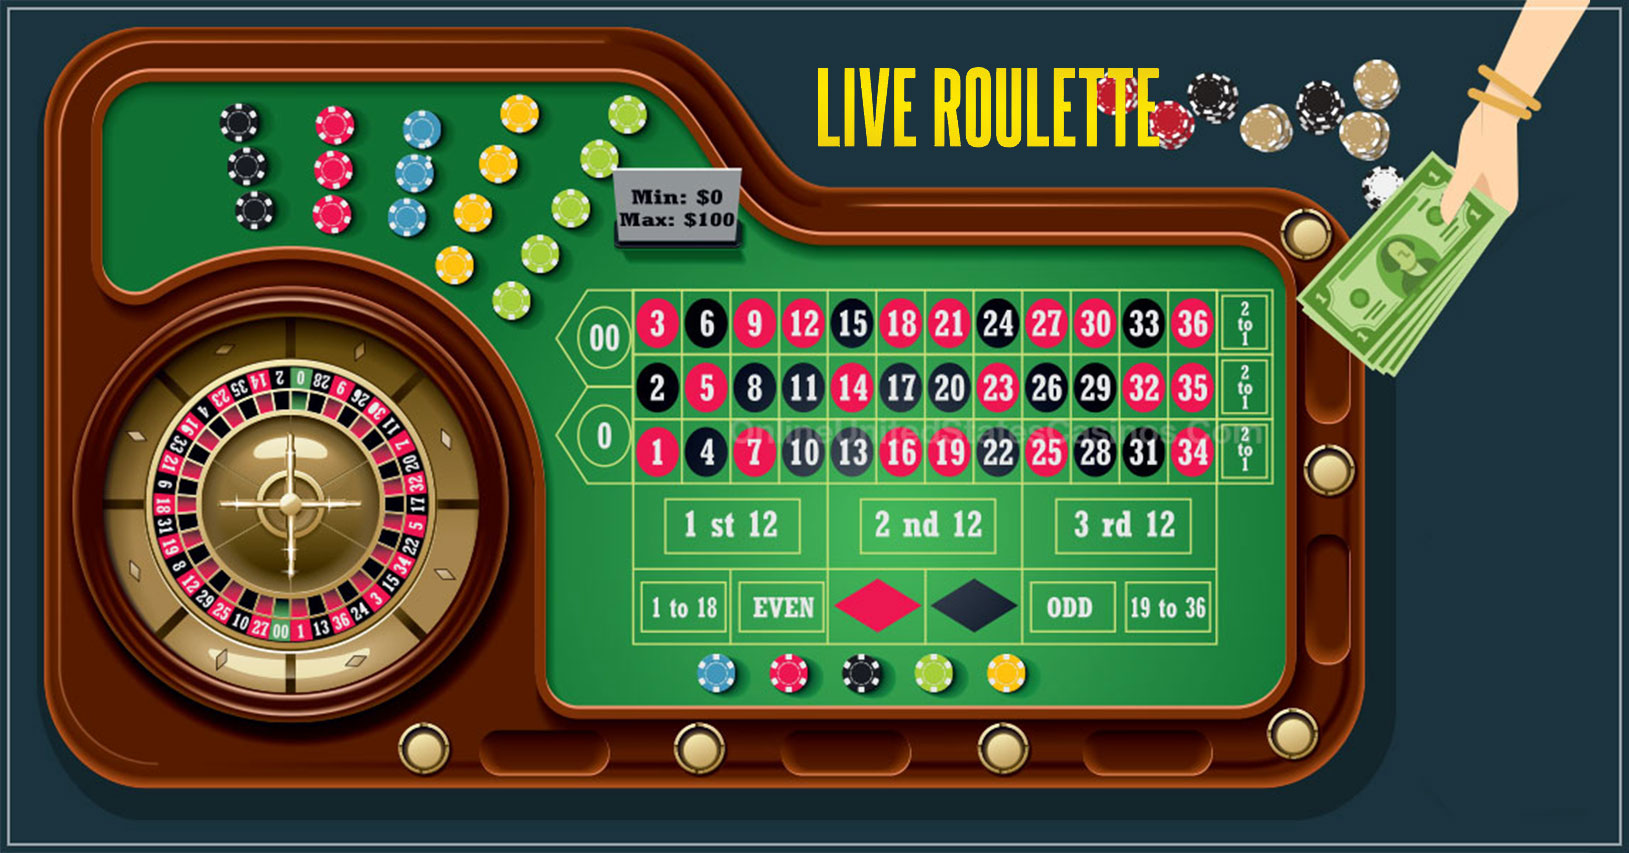 Live roulette Tips 10 Live Roulette Tips for Split